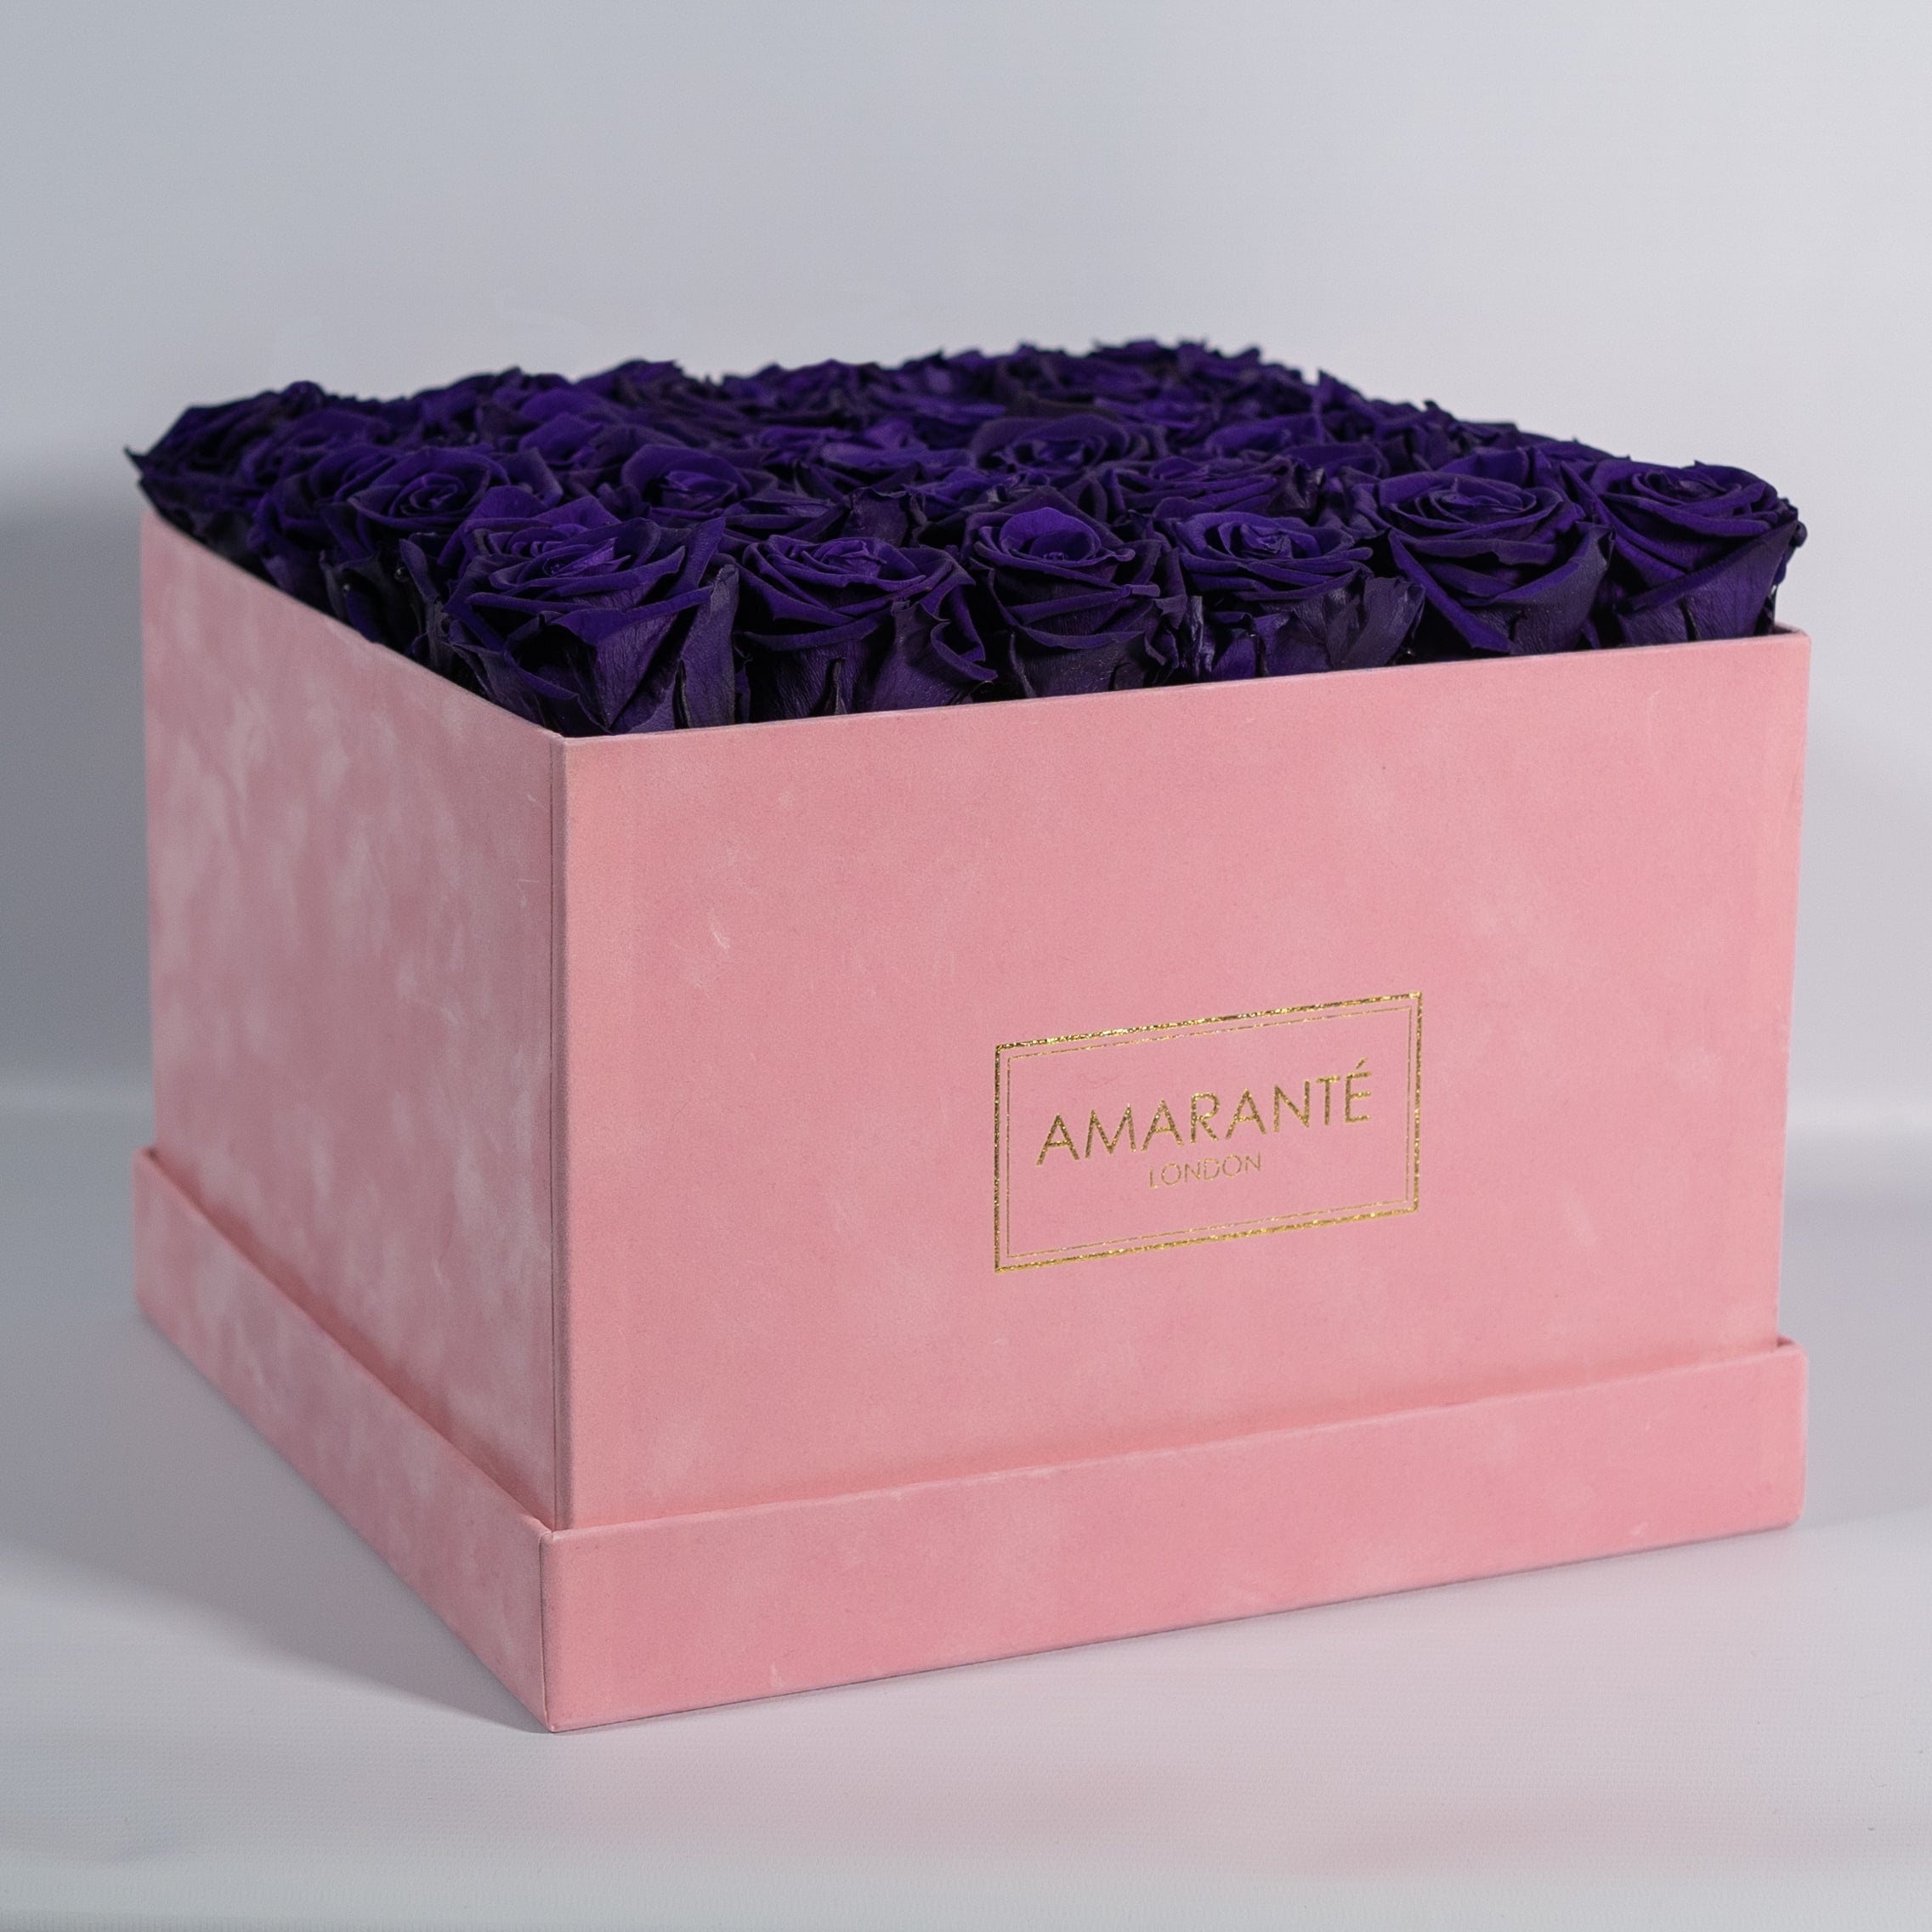 Stunning dark purple roses implying fantasy and creativity  